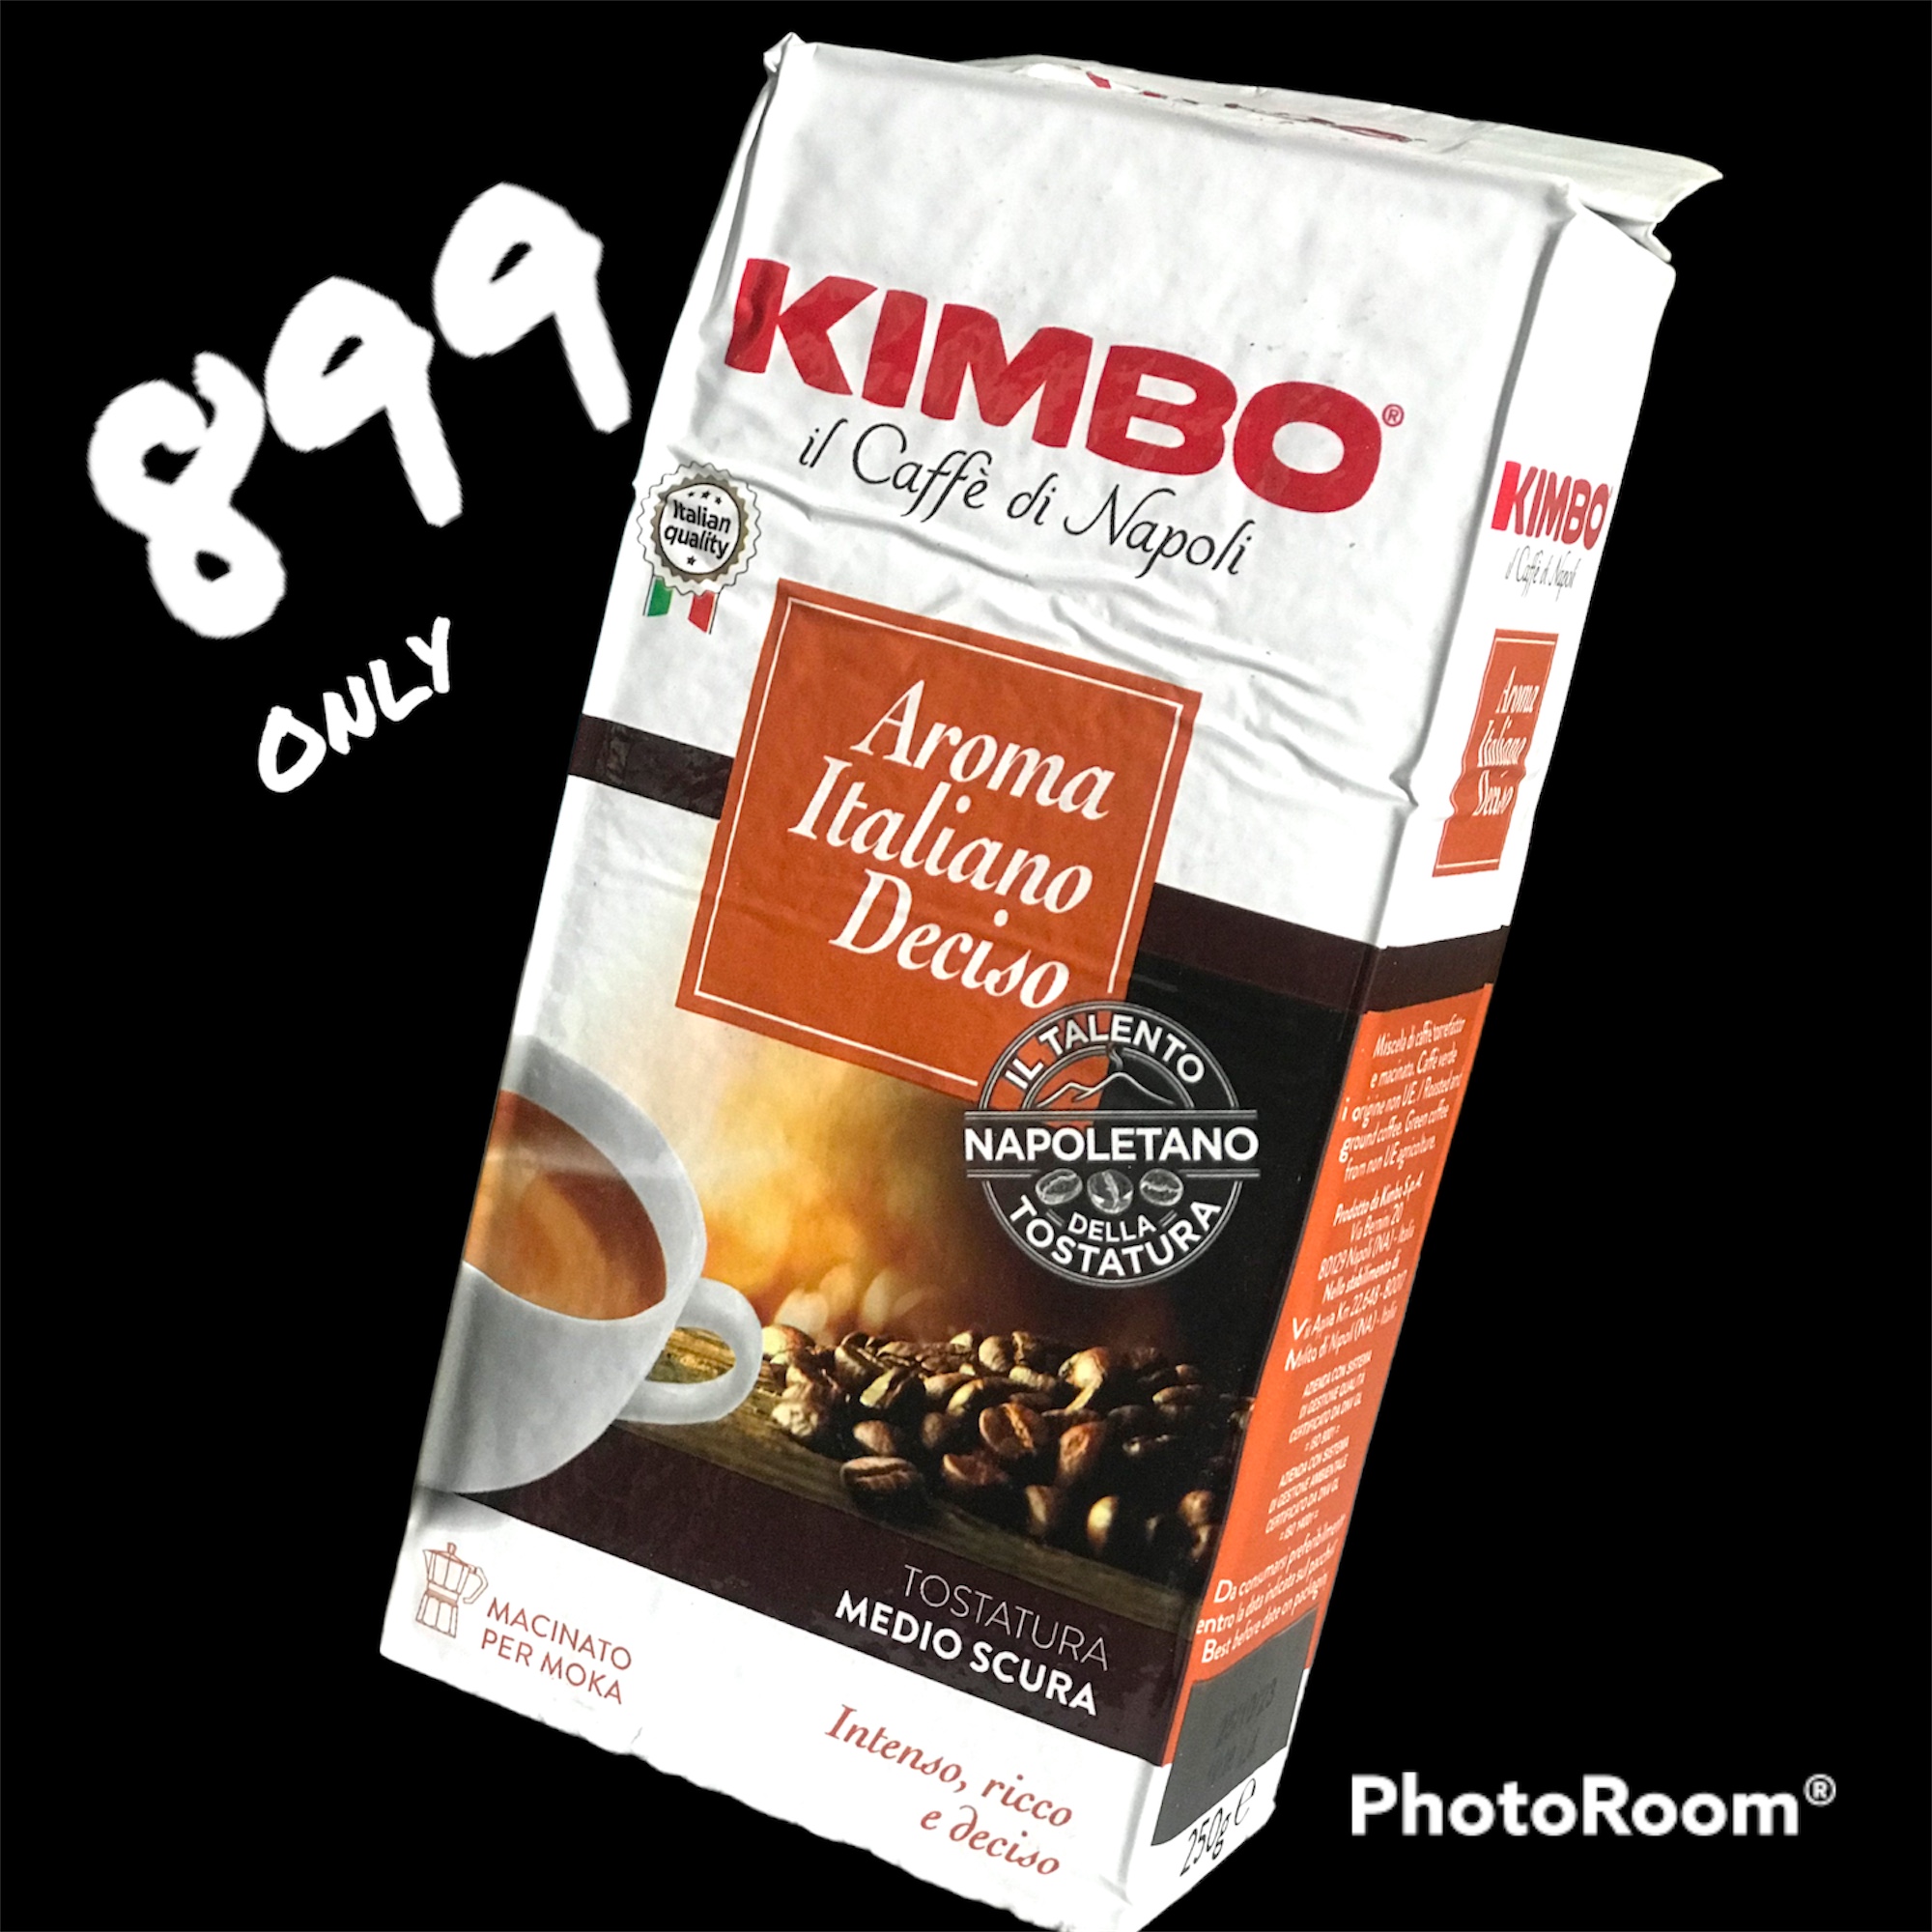 Kimbo Aroma Italiano Deciso 250g Imported from Italy Ground Coffee  #marcuzgarage #Coffee #kimbo #aromaitalianodeciso #aromaitaliano  #goodcoffee